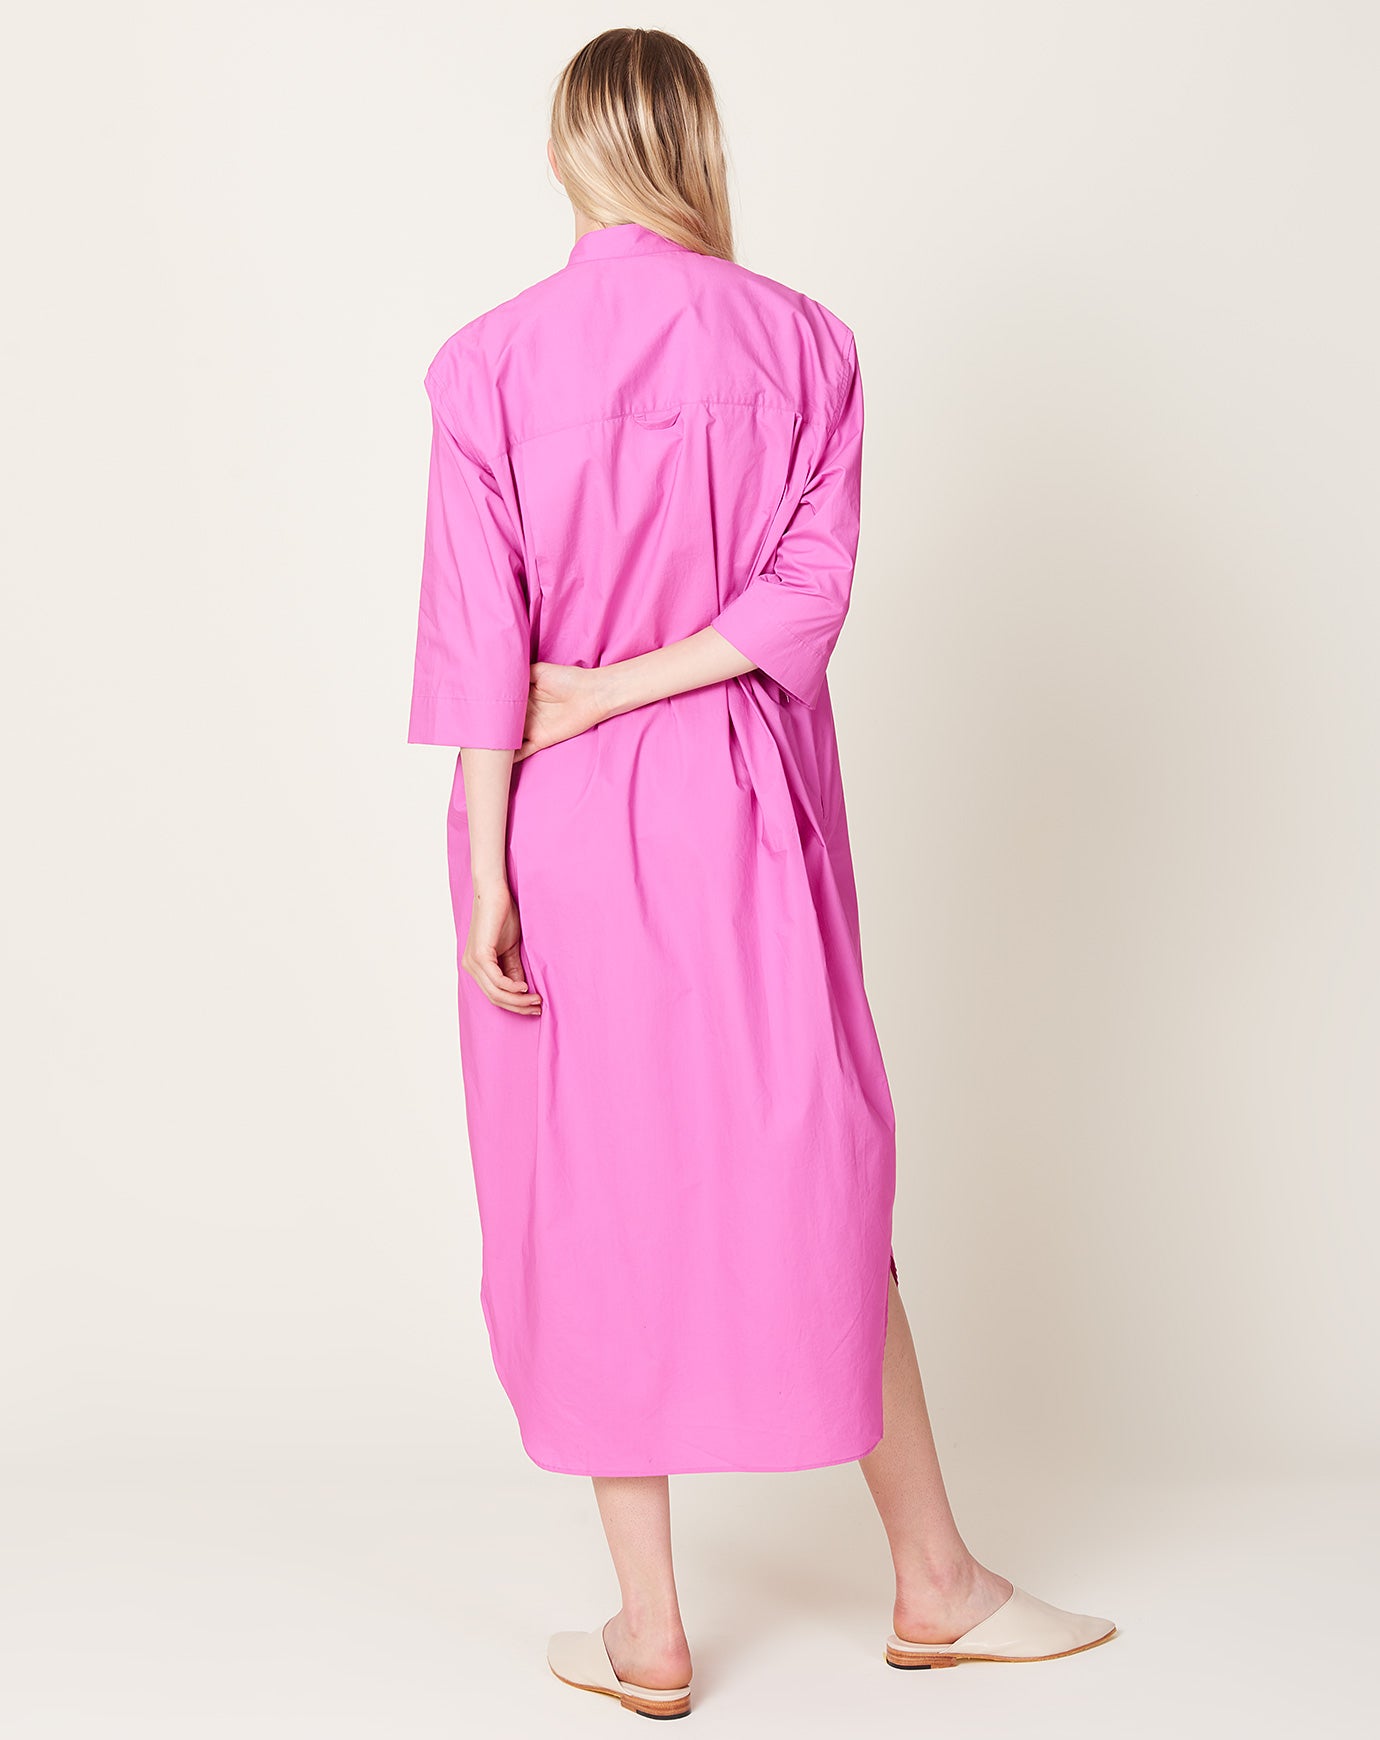 Maria McManus Banded Collar Dress in Fuschia Pink